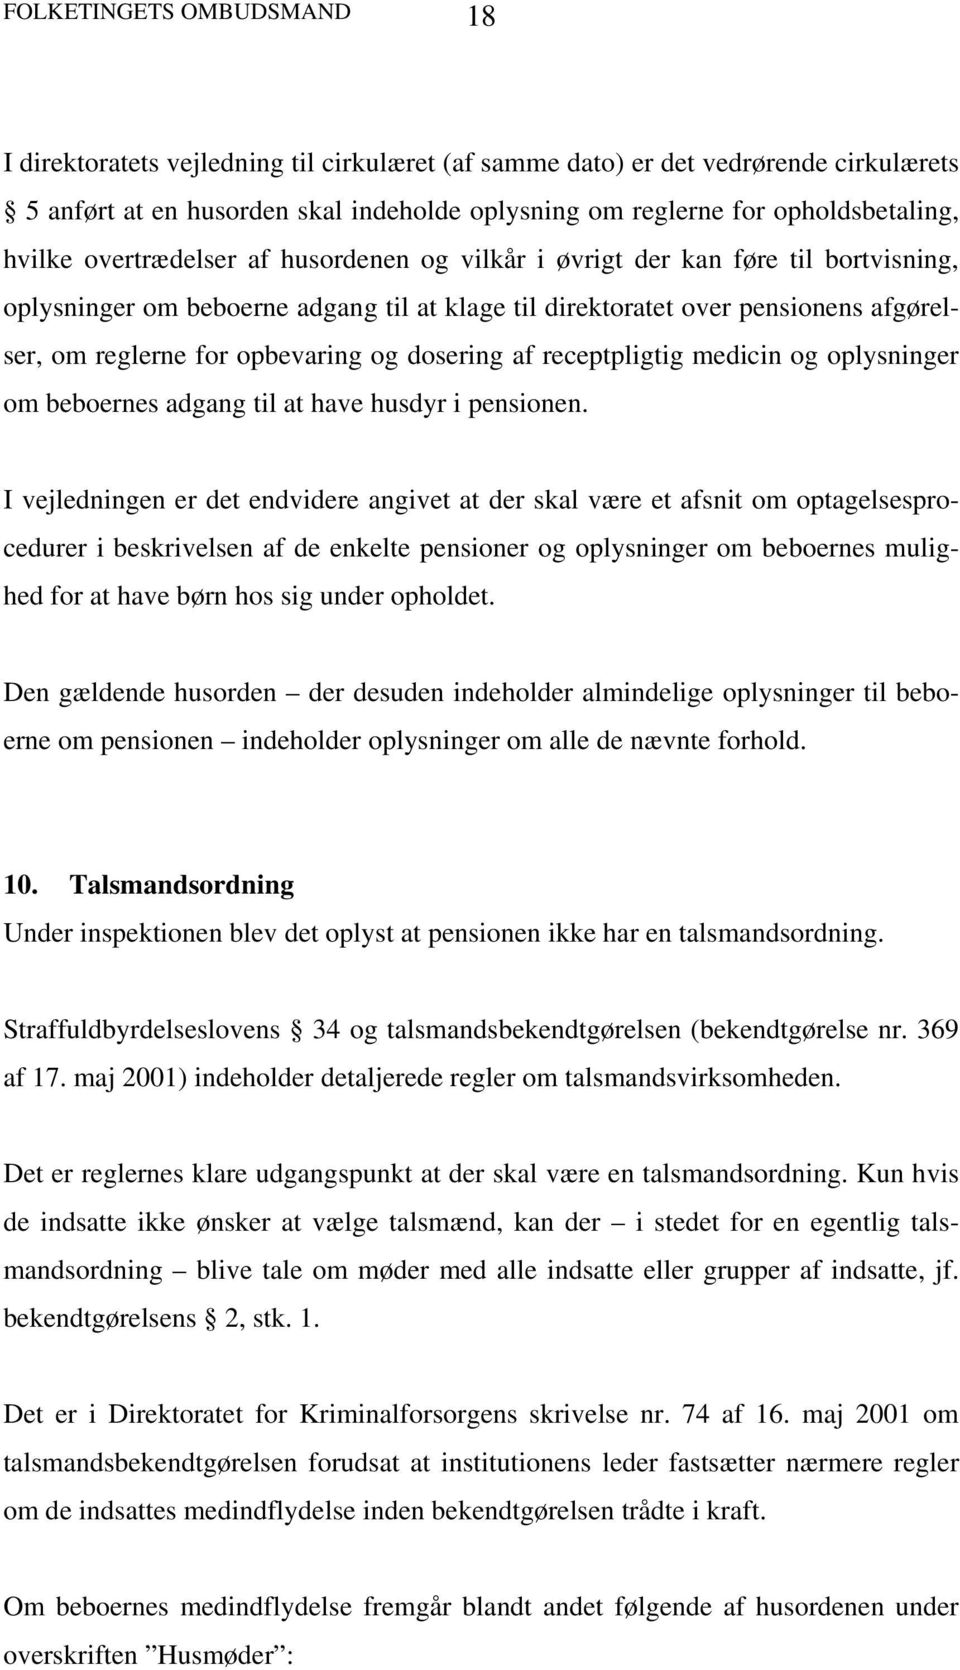 FOLKETINGETS OMBUDSMAND 1 - PDF Free Download